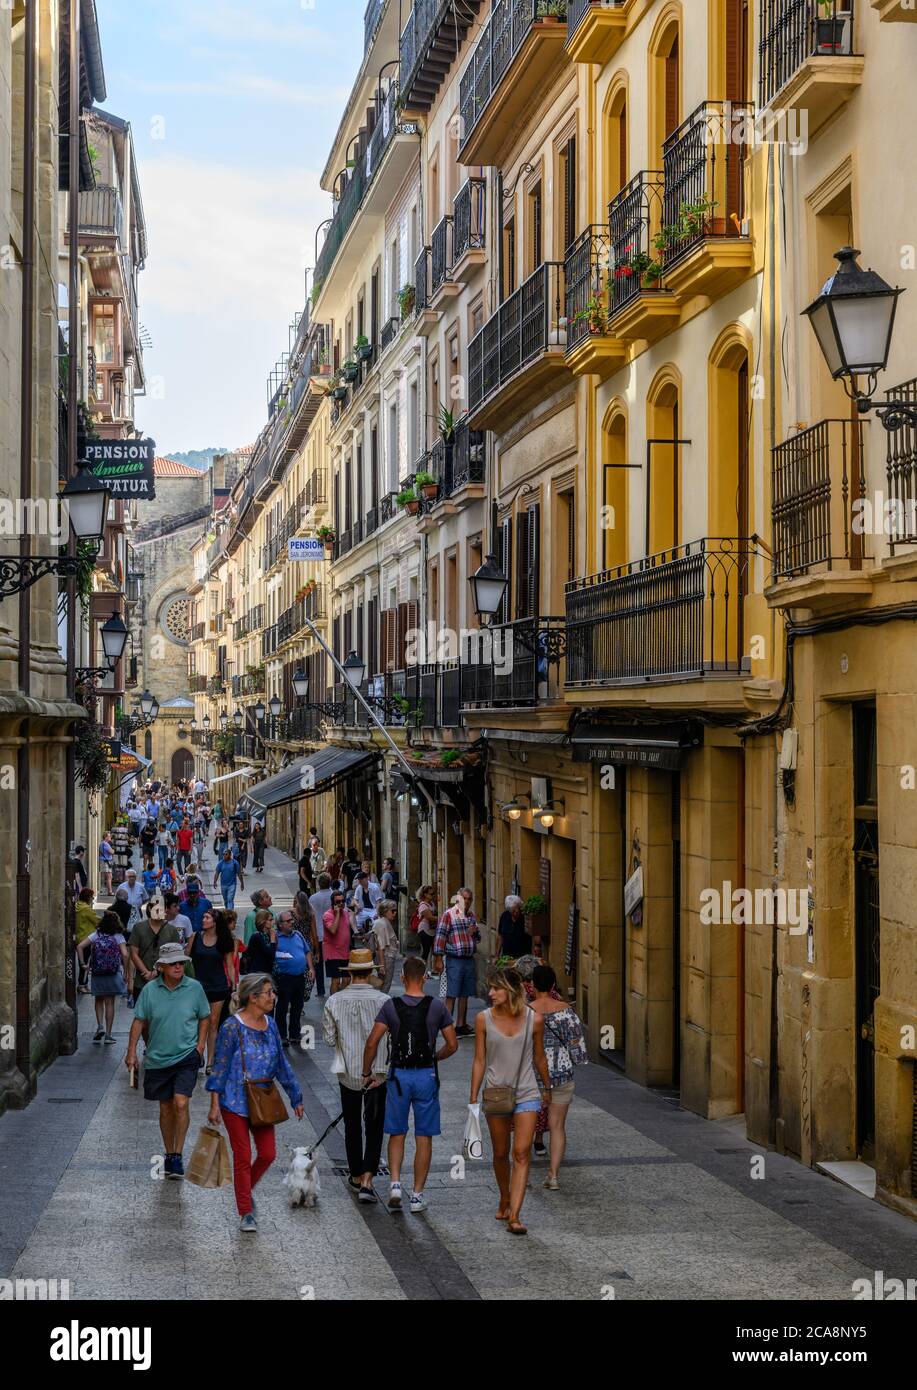 Abuztuaren 31, una concurrida calle peatonal en el casco antiguo de San Sebastián Foto de stock